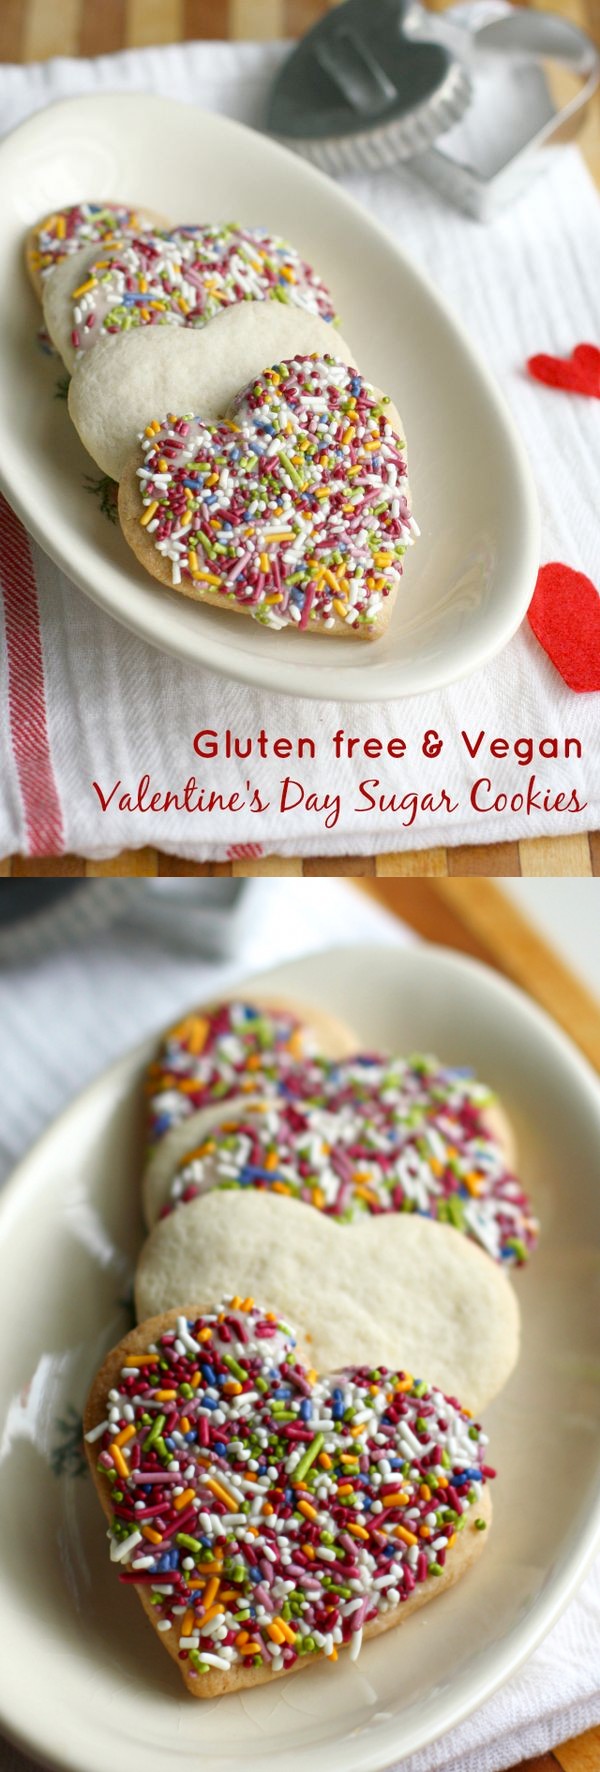 Gluten Free and Vegan Sugar Cookies